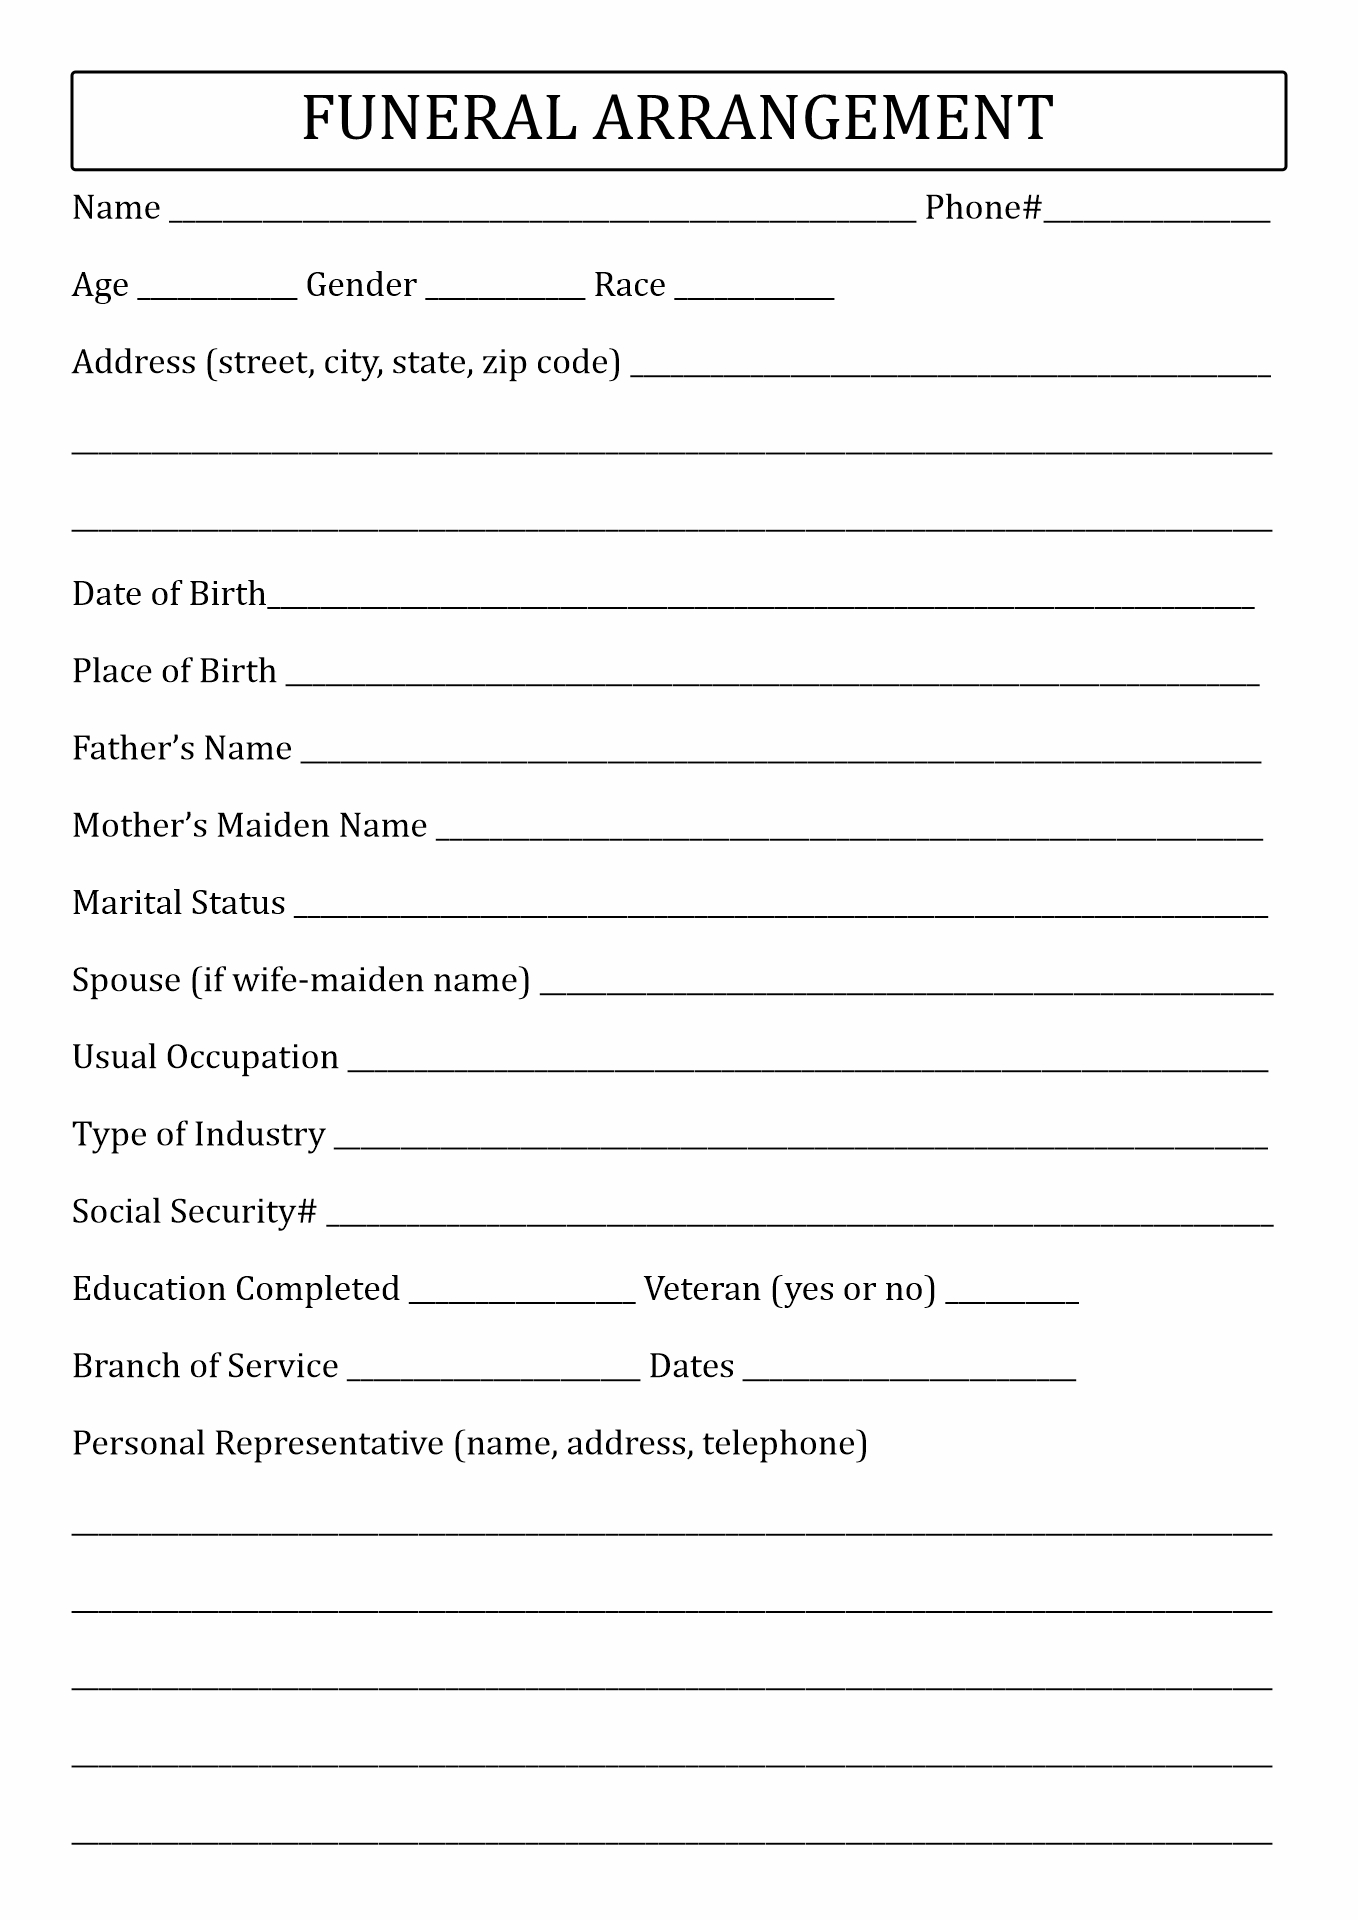 Funeral Pre-Planning Worksheet Image